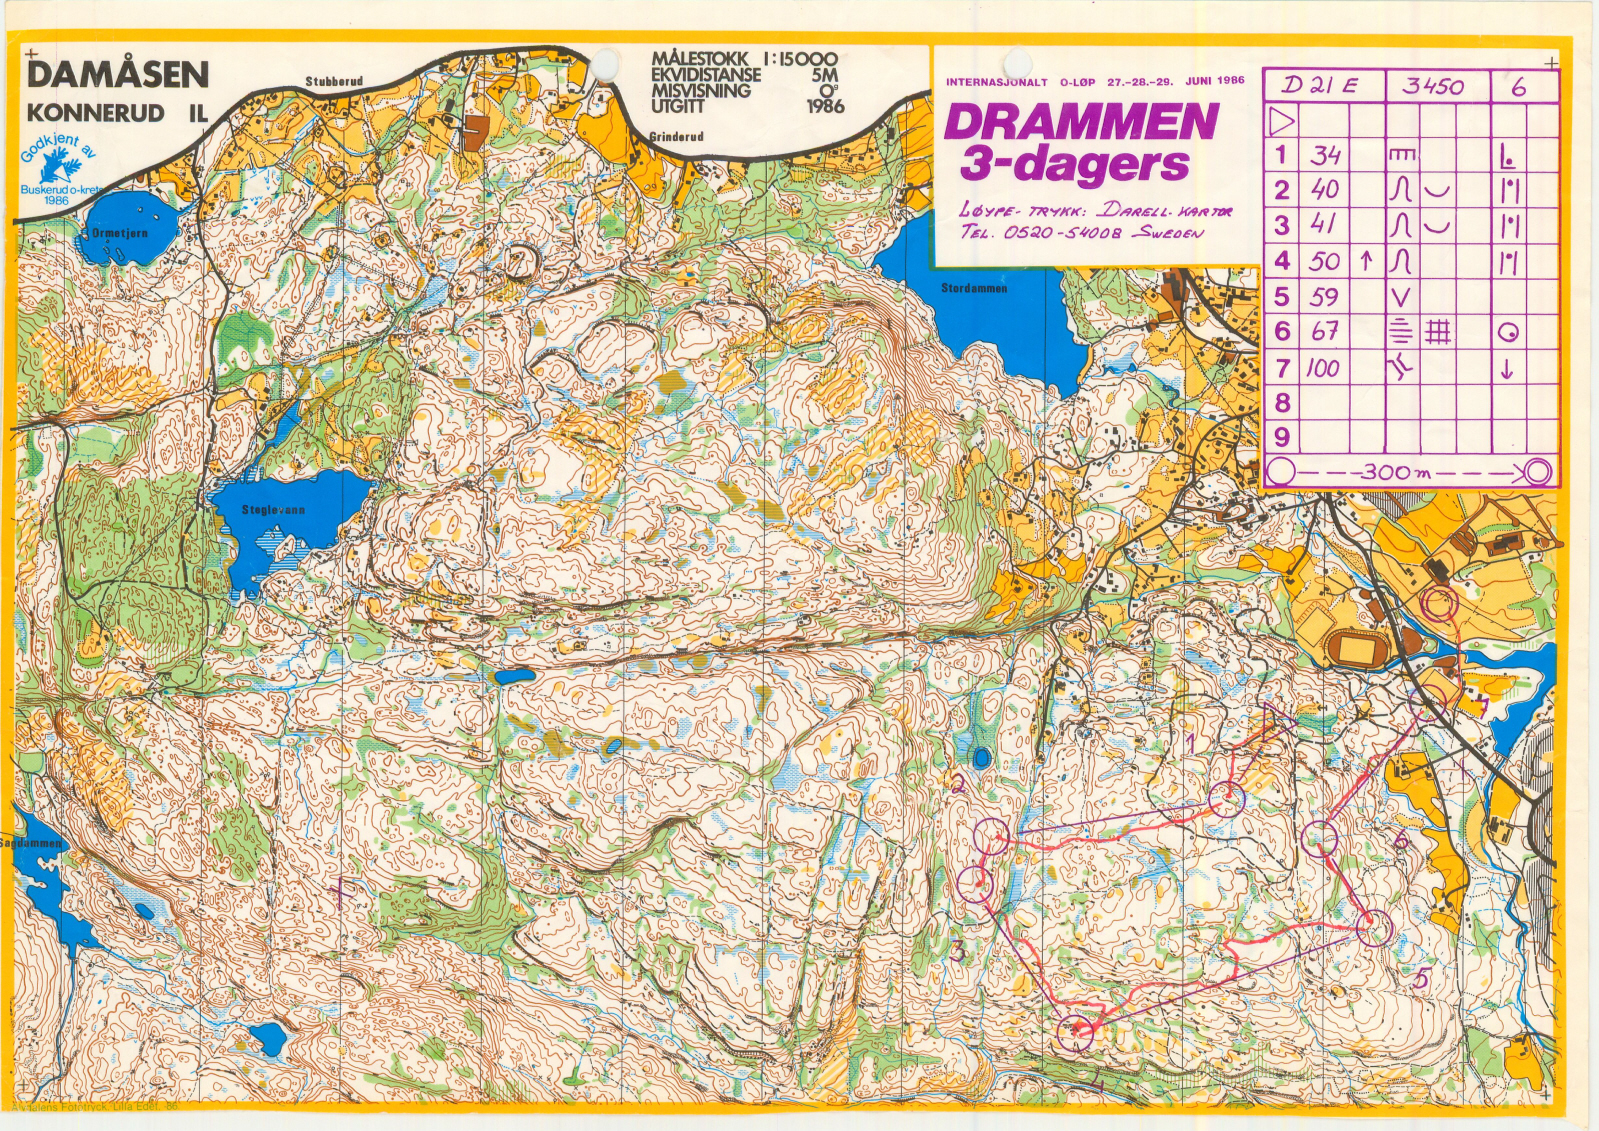 Drammen 3-dagers etappe 1 (1986-06-27)